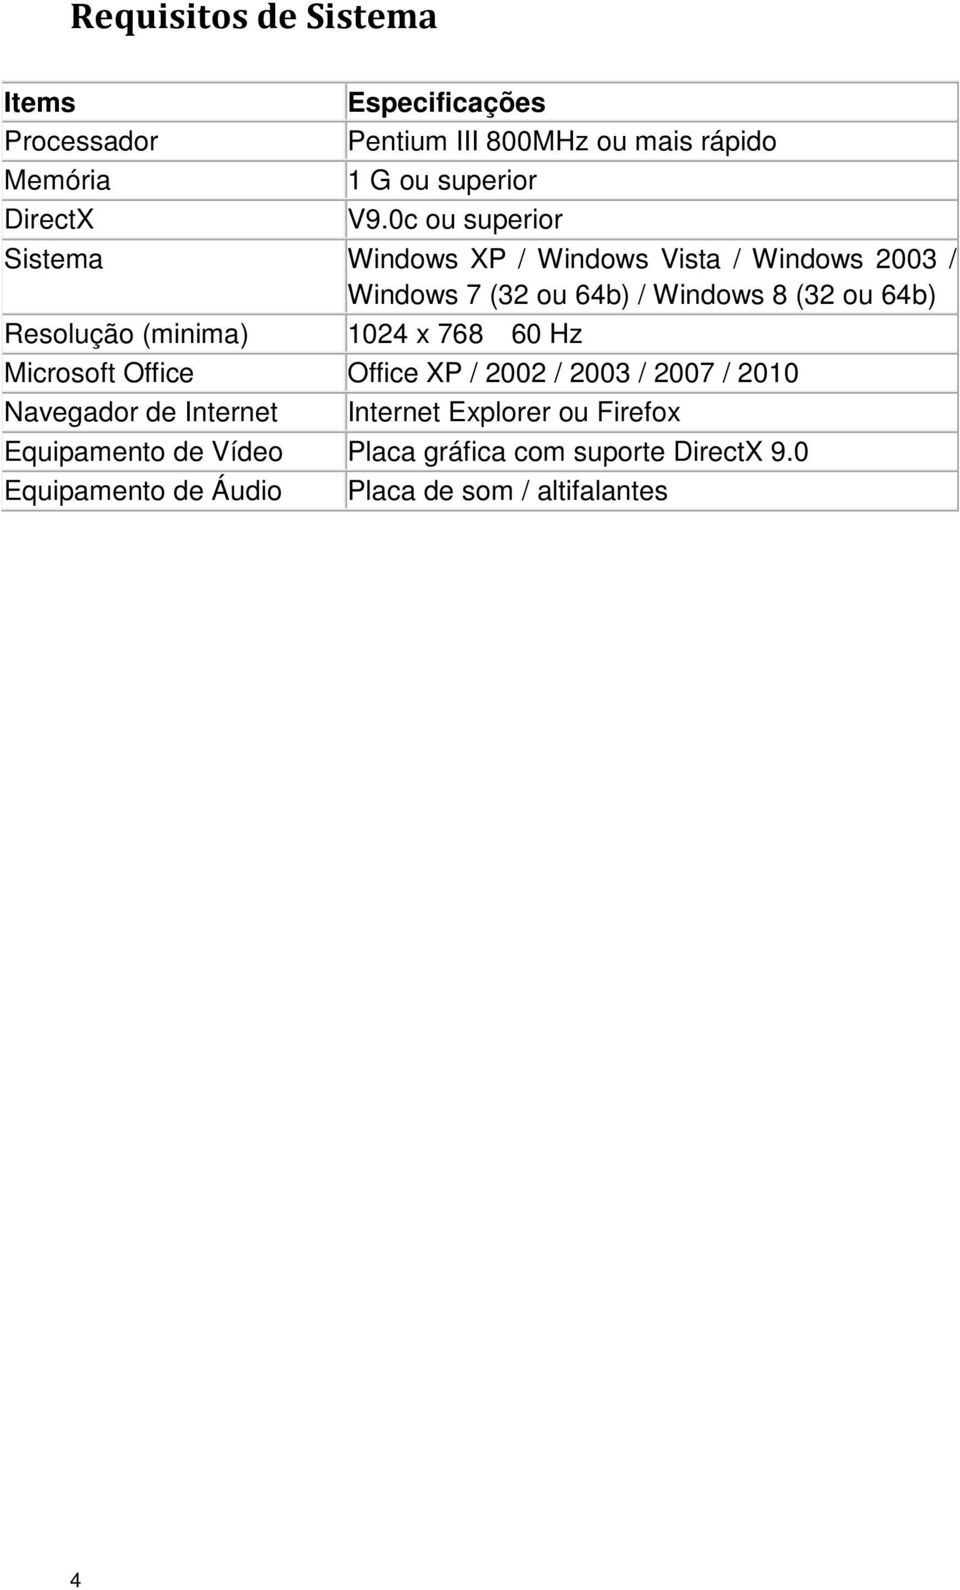 Resolução (minima) 1024 x 768 60 Hz Microsoft Office Office XP / 2002 / 2003 / 2007 / 2010 Navegador de Internet Internet